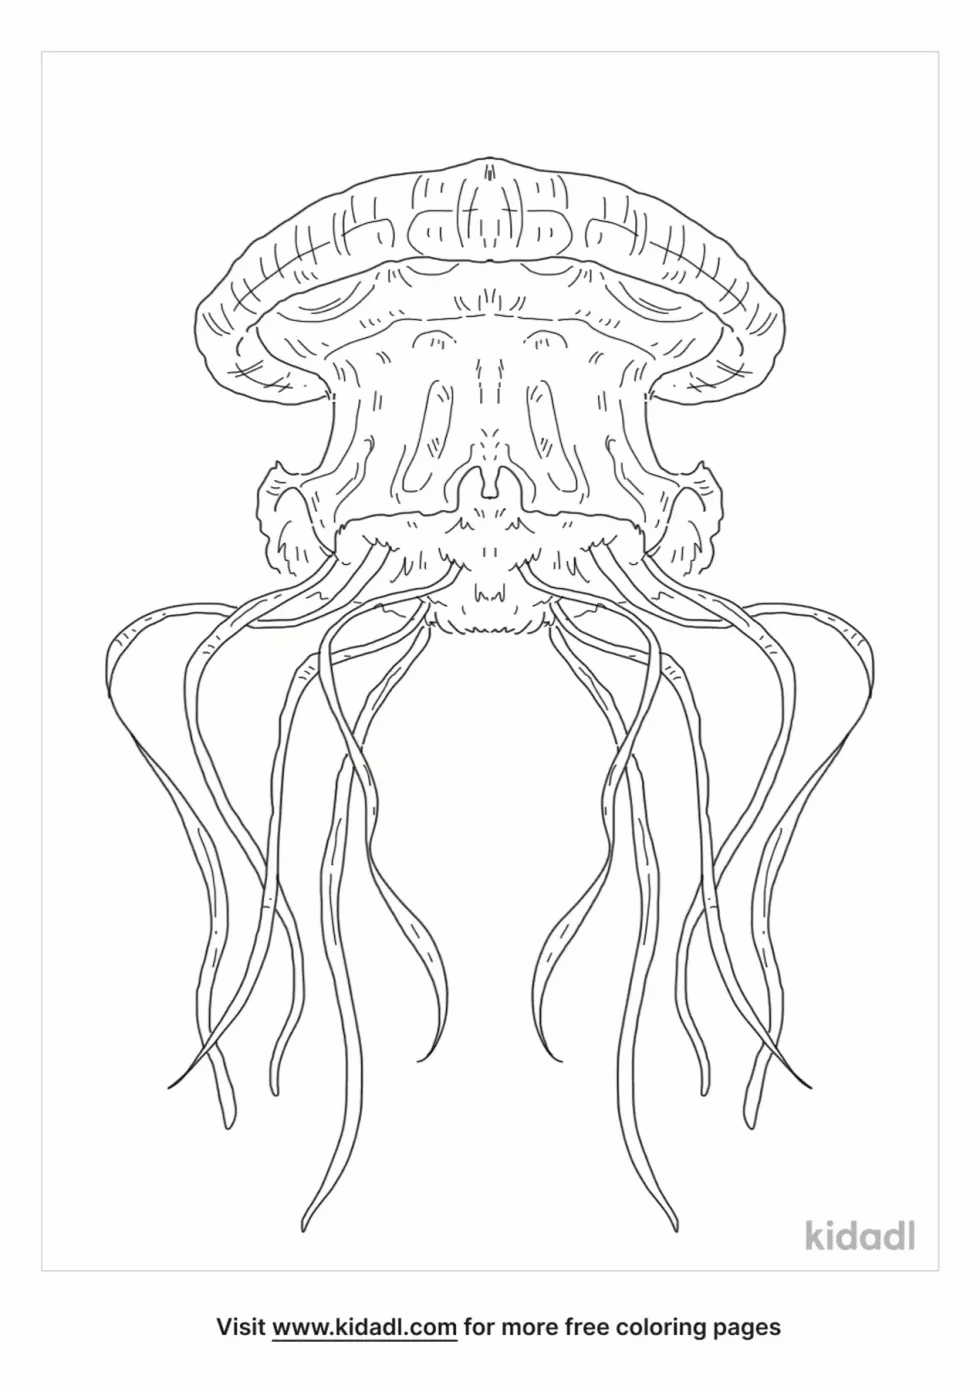 Crown Jellyfish | Kidadl